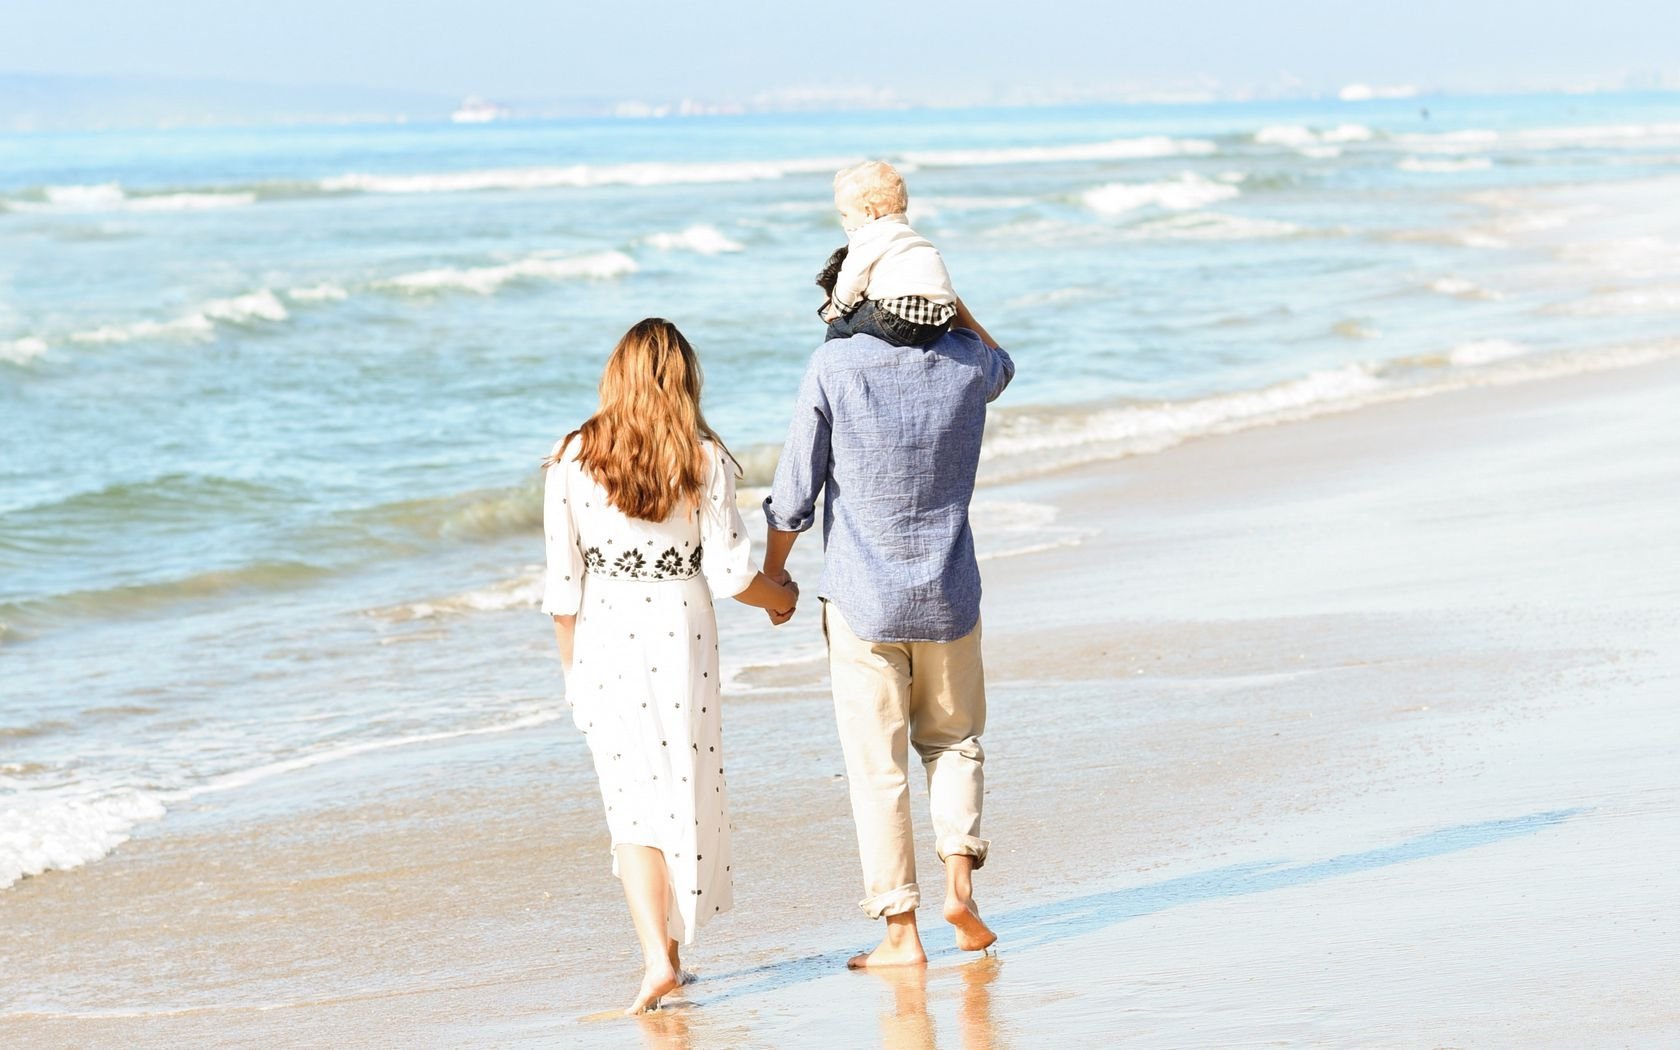 Картинки муж и жена на пляже (65 фото) » Картинки и статусы про окружающий мир вокруг